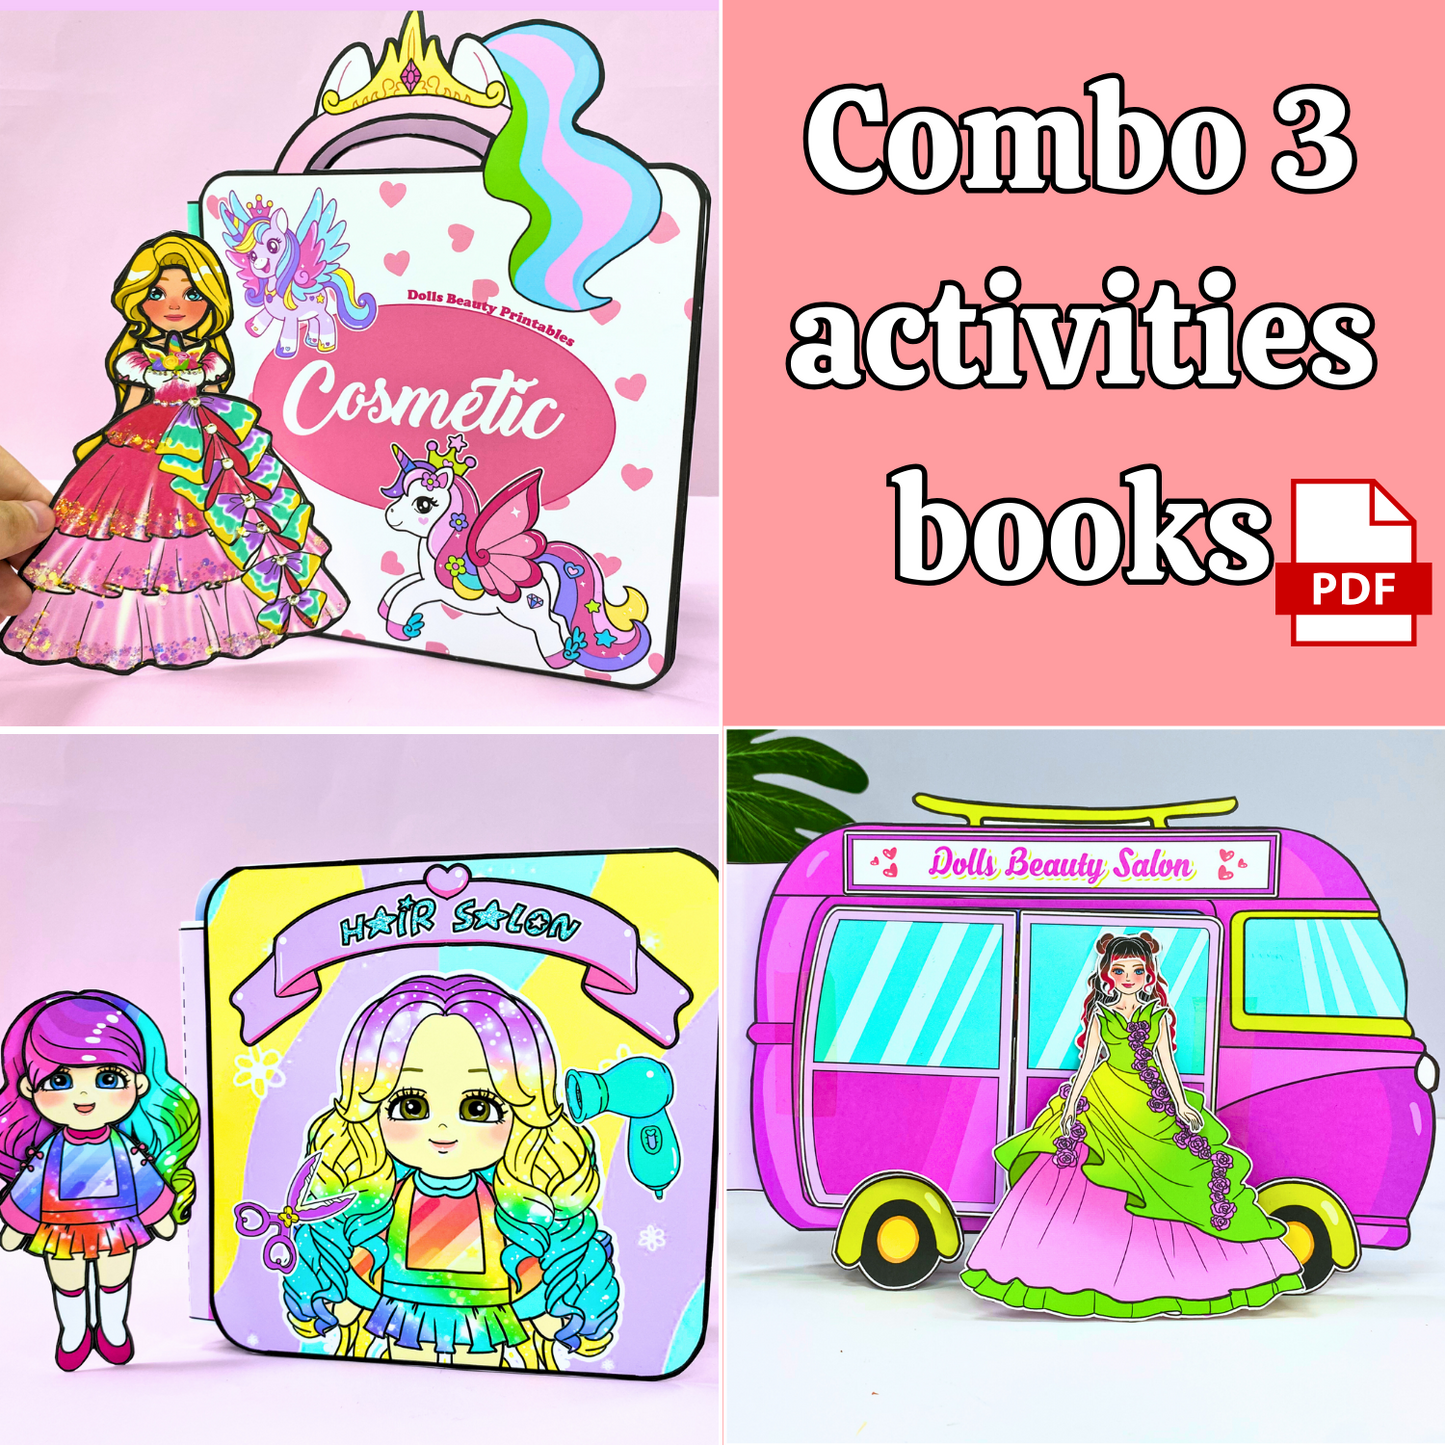 Education Activity Book | Paper Make up bag for kids - Paper doll - Paper Crafts for Kids - DIY Unique Holiday Gift for kids - DIY crafts